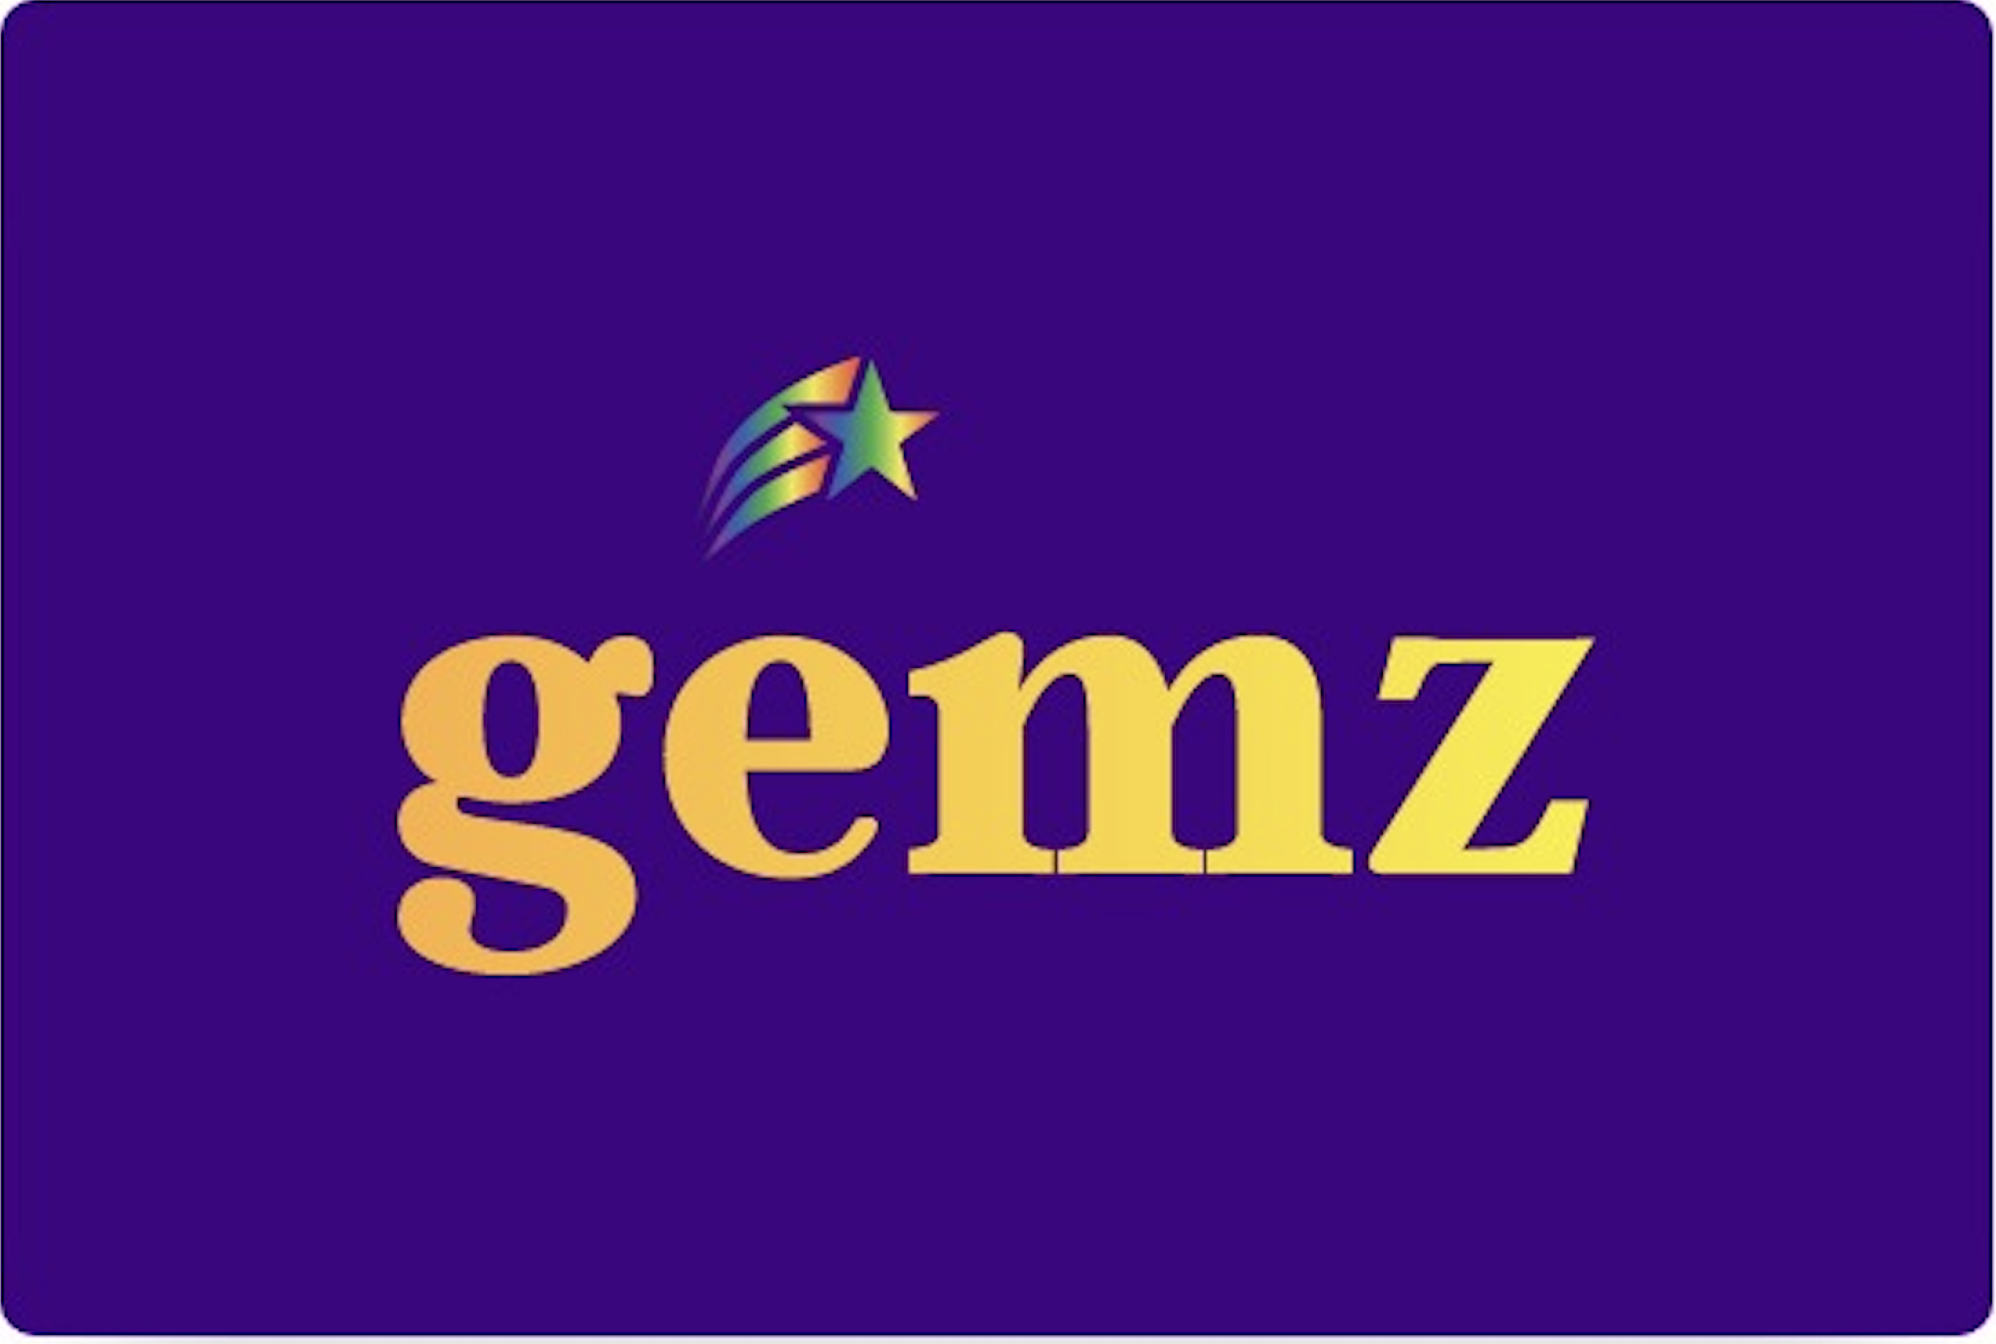 G E M Z Properties